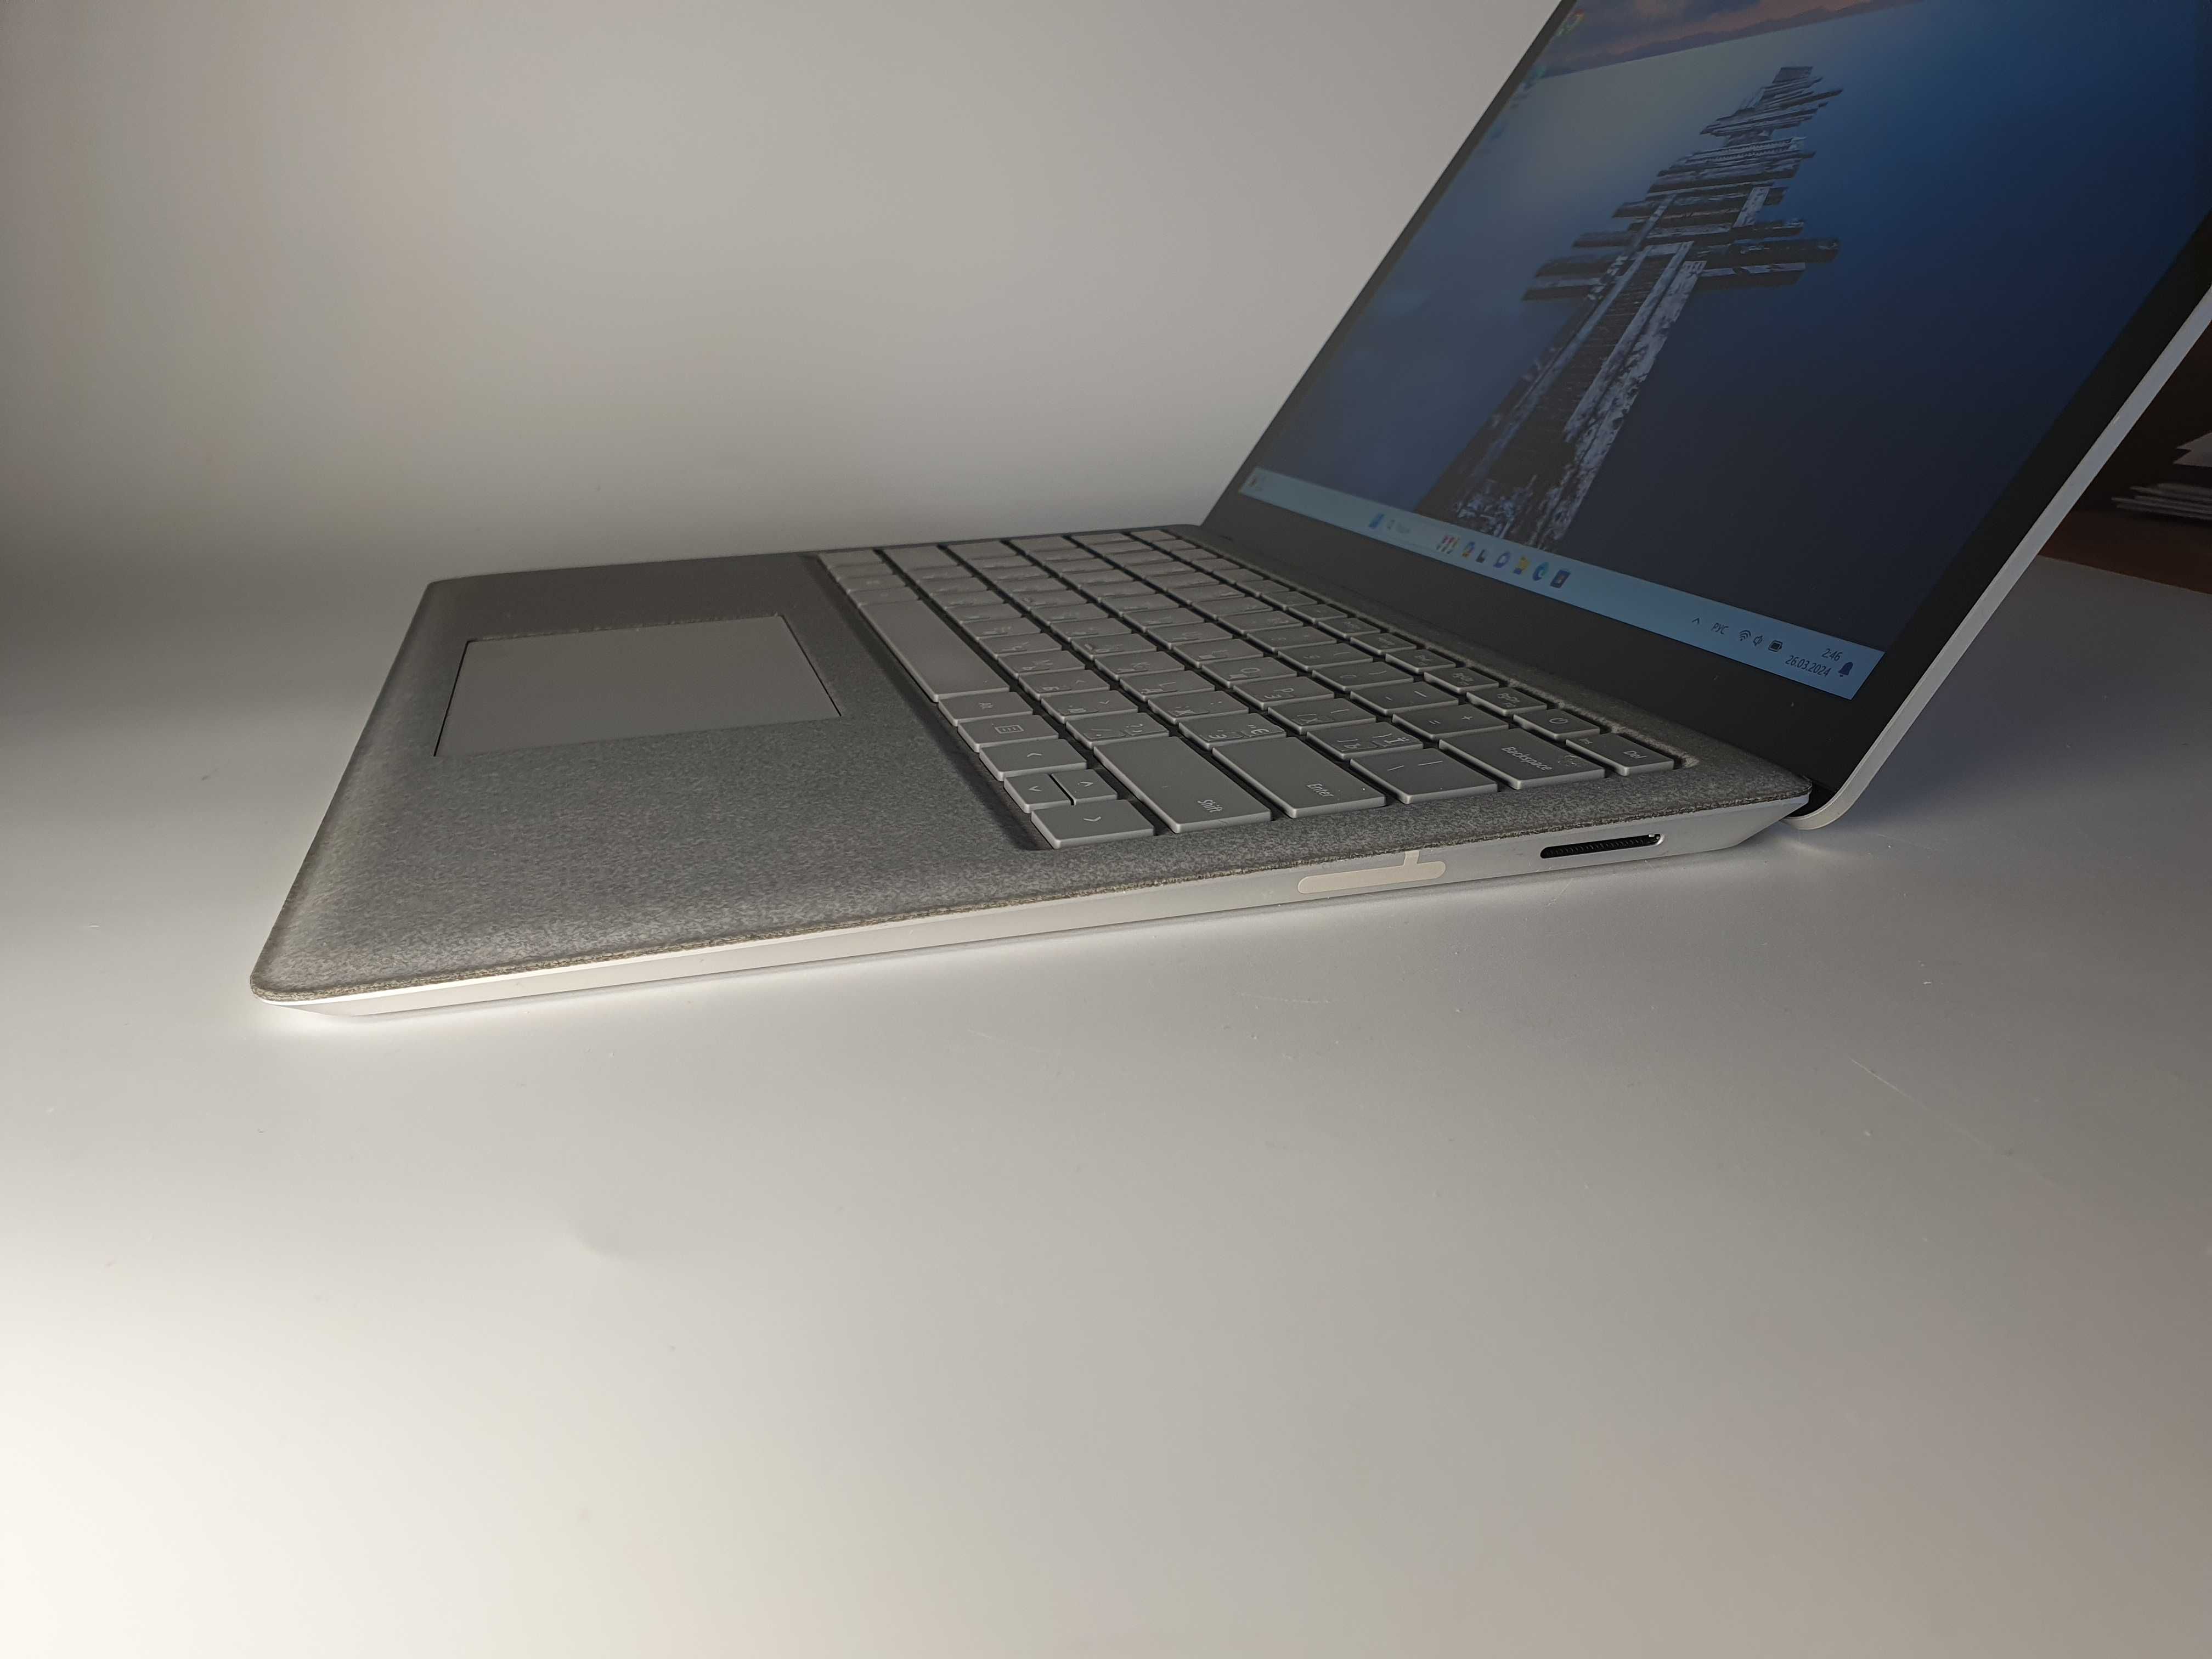 Microsoft Surface Book 2 Intel i5-8250U, 8GB RAM, SSD 128Gb